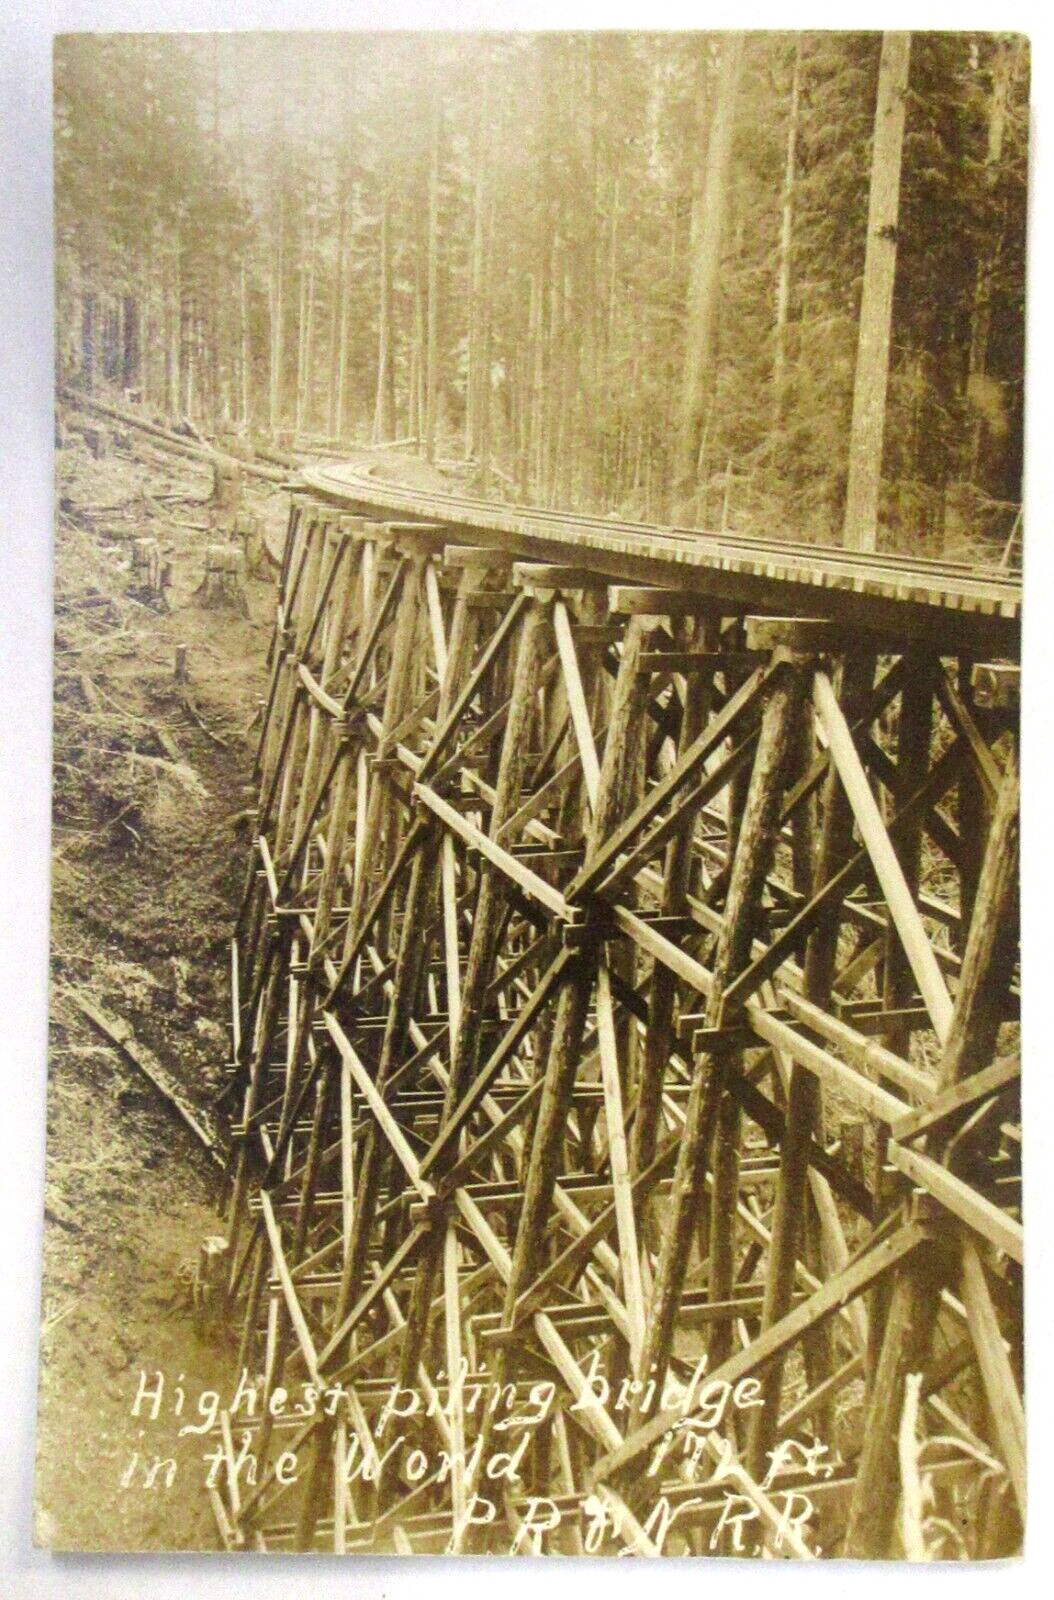 1912 PR&N RAILROAD Highest Piling Bridge in World 172 Ft. OREGON RPPC postcard